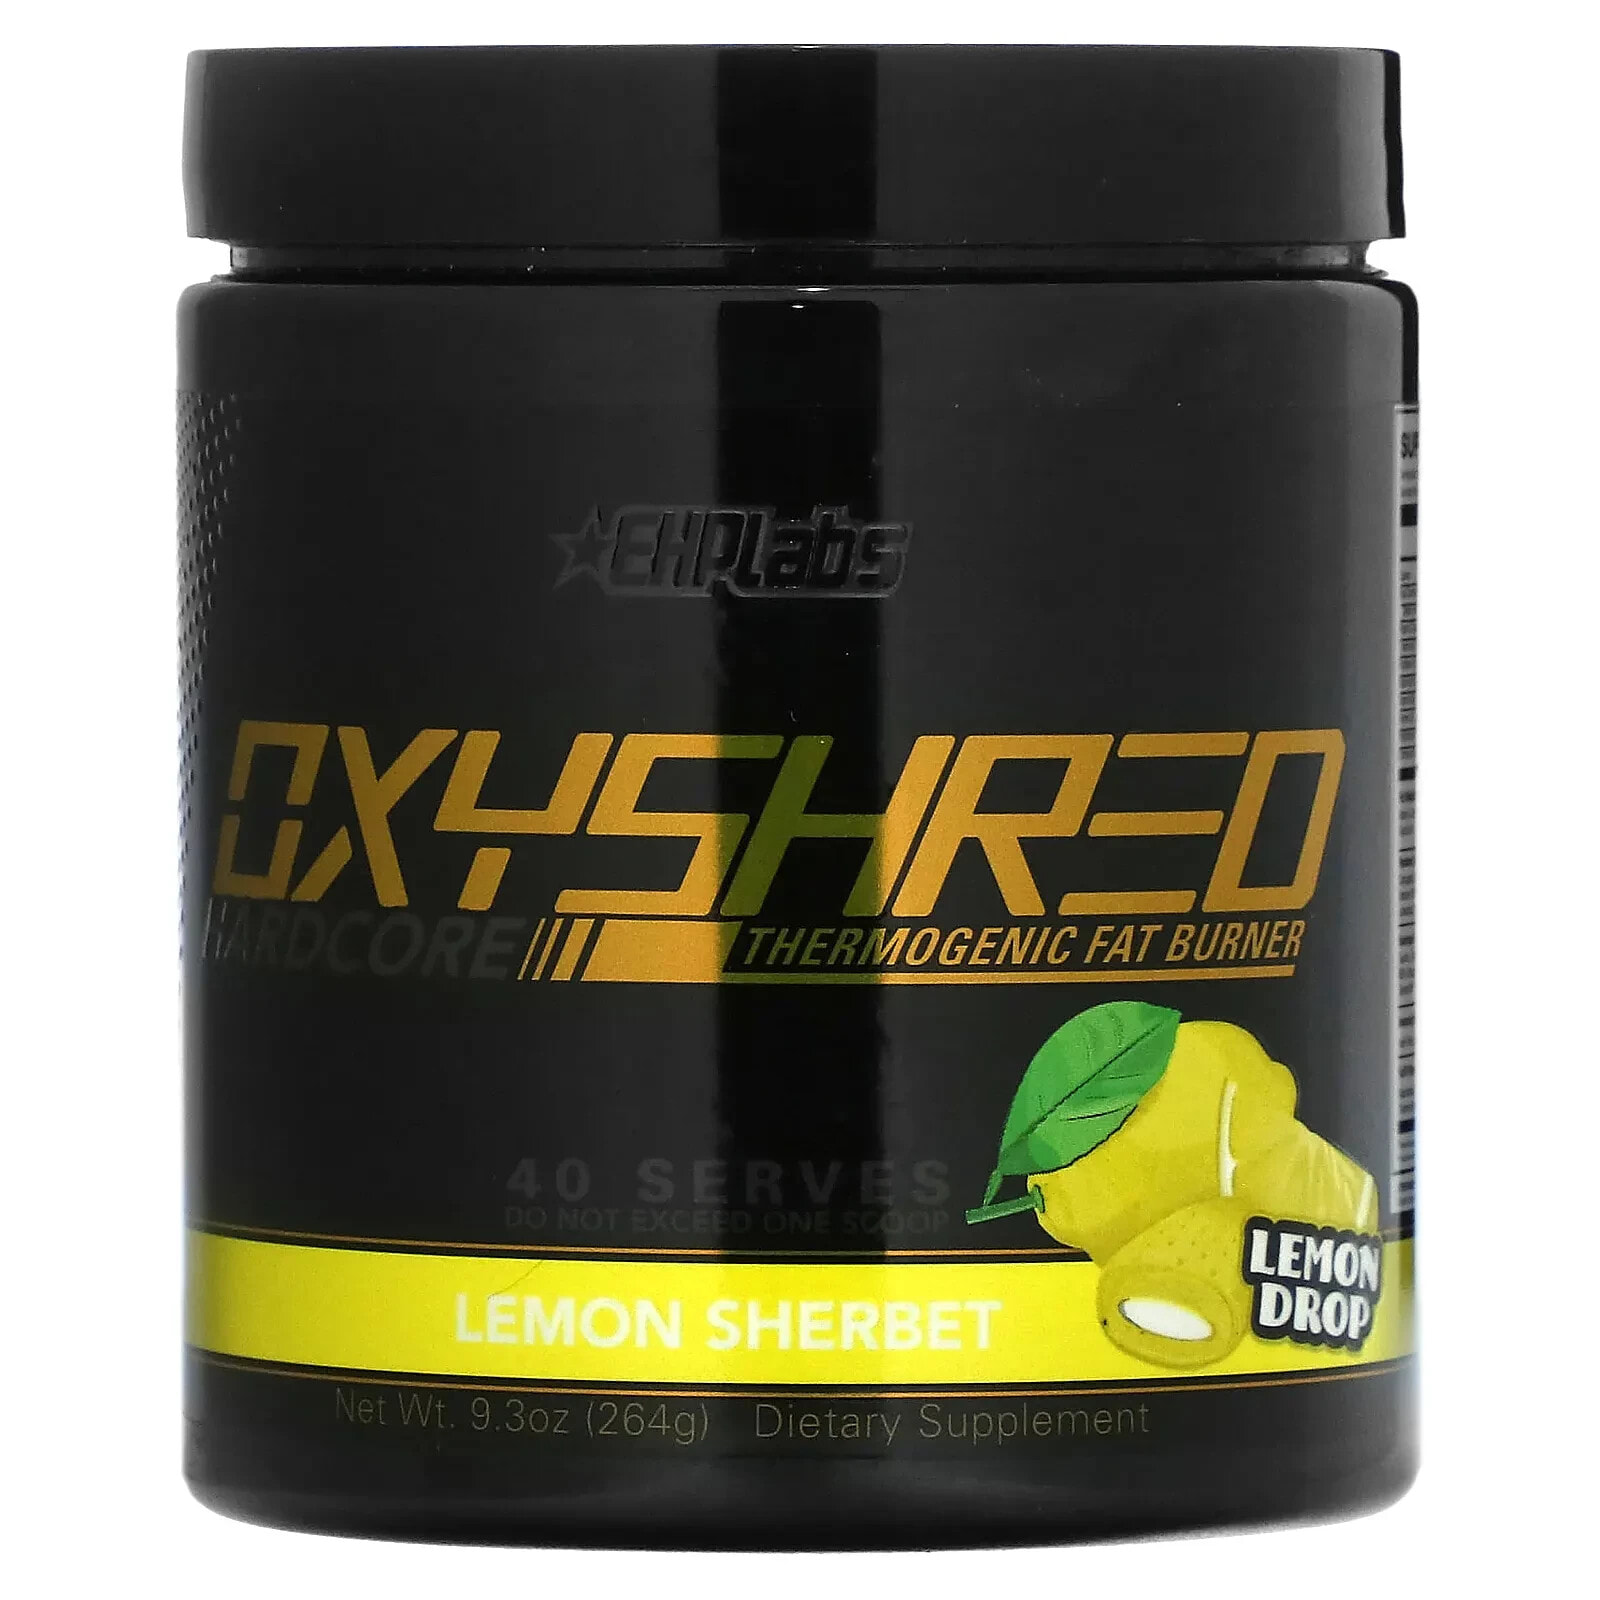 OxyShred, Hardcore Thermogenic Fat Burner, Lemon Sherbet, 9.3 oz (264 g)